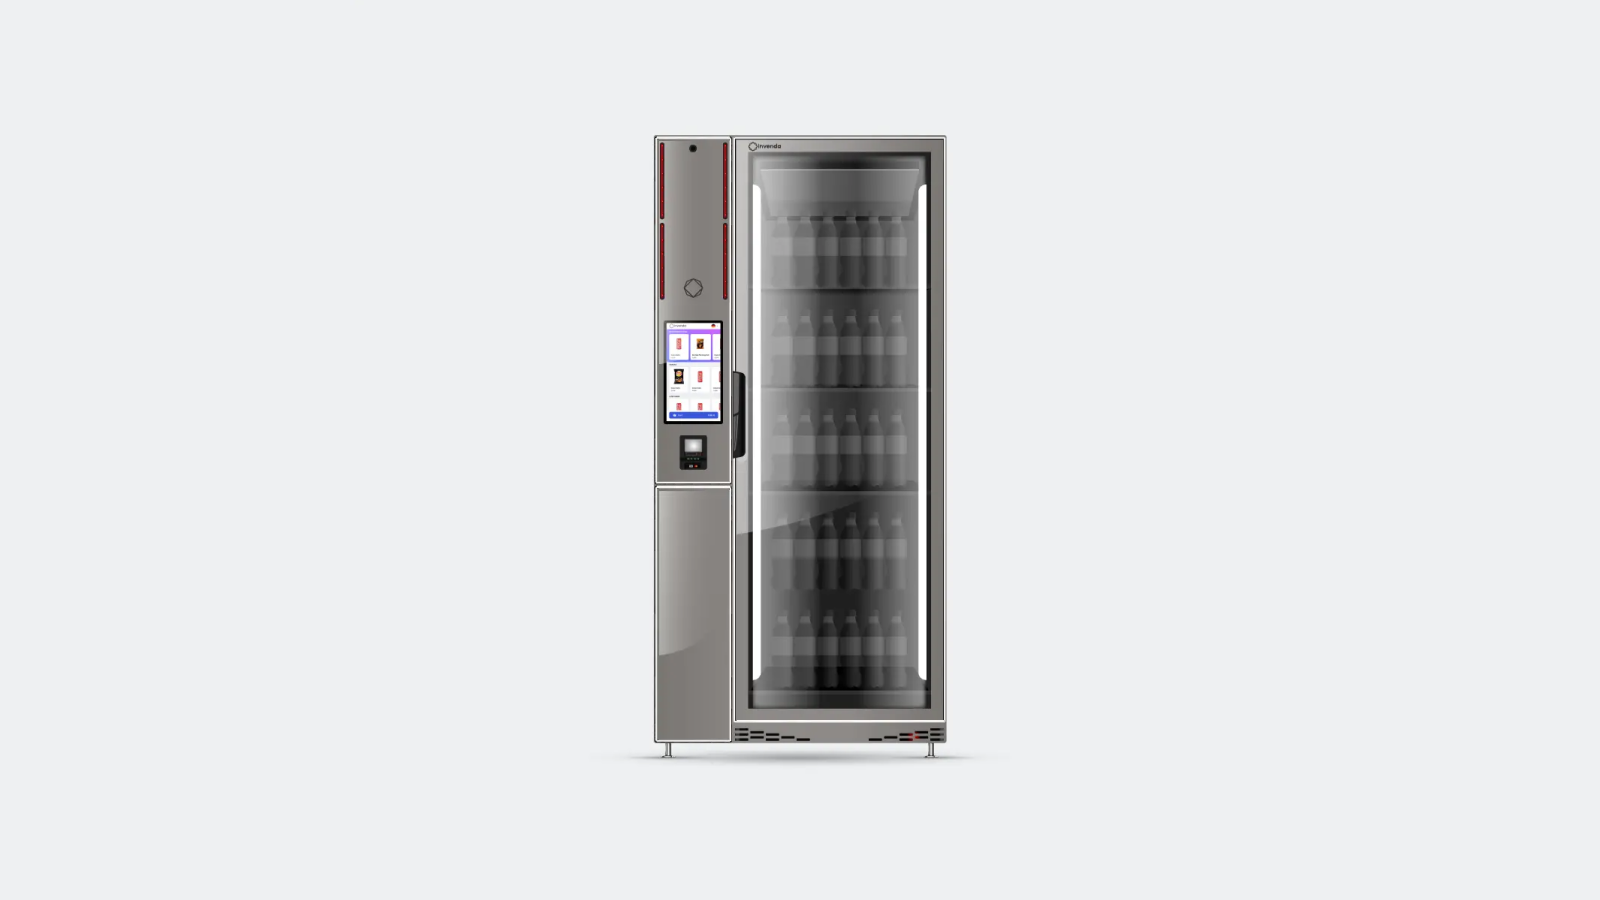 Smart vending fridge with a screen